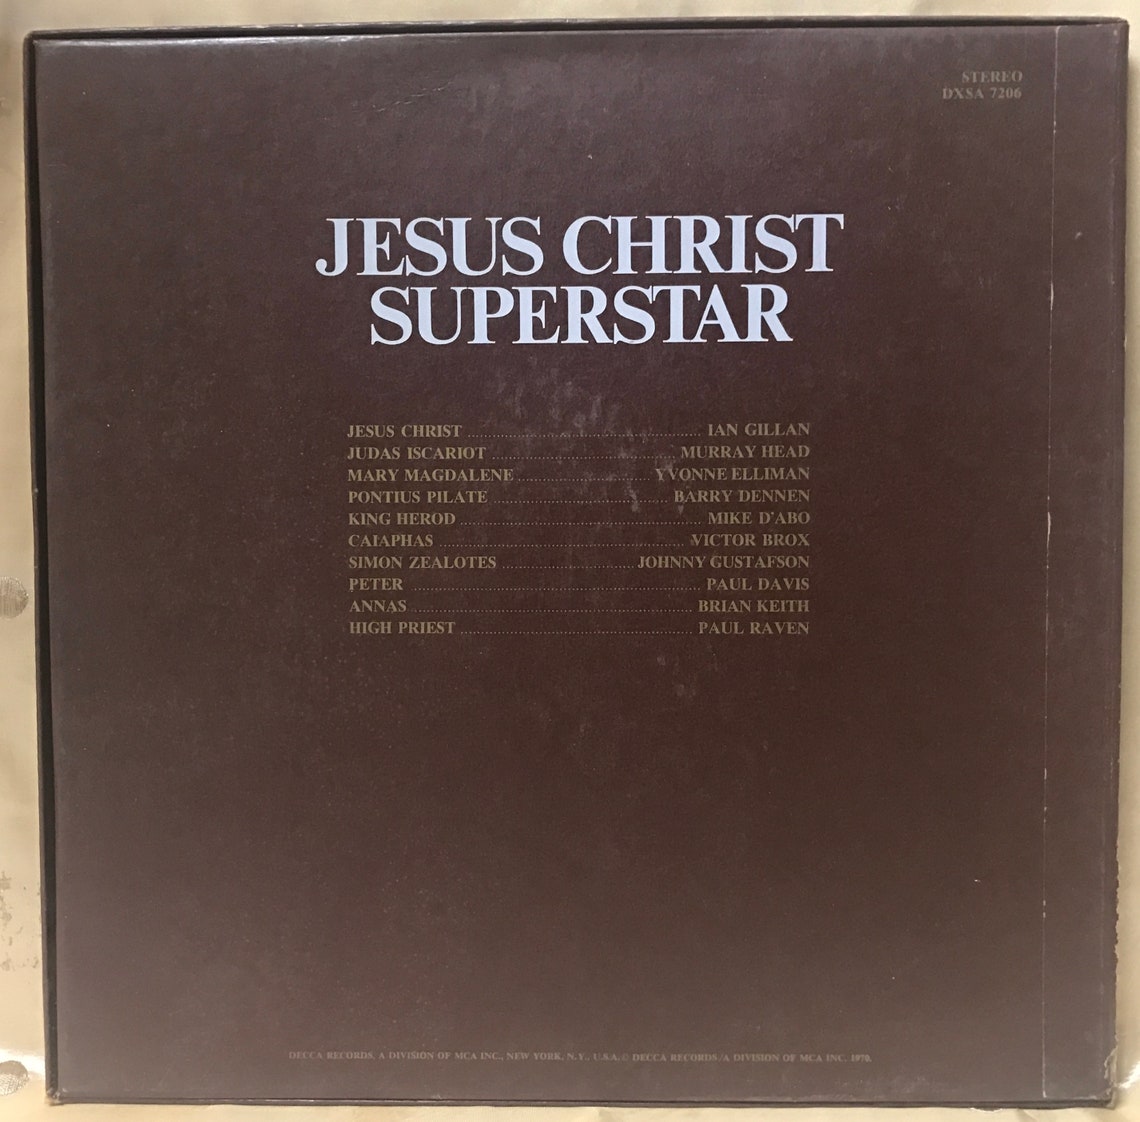 Jesus Christ Superstar Album 1970 Decca DXSA 7206 DBL Lp | Etsy